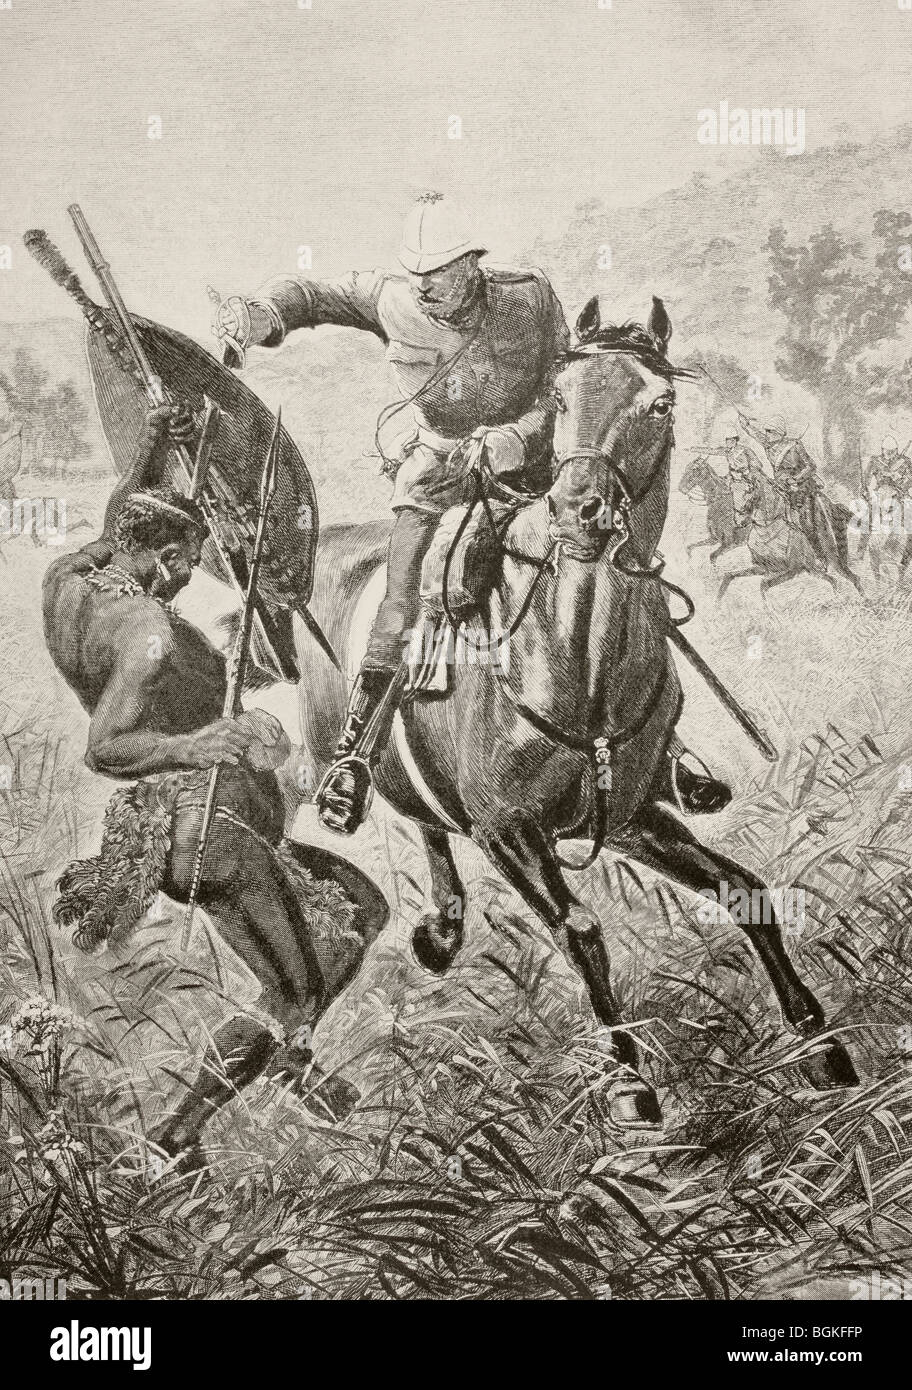 Un cavalryman inglese attacca un guerriero Zulu durante la guerra Anglo-Zulu del 1879. Foto Stock